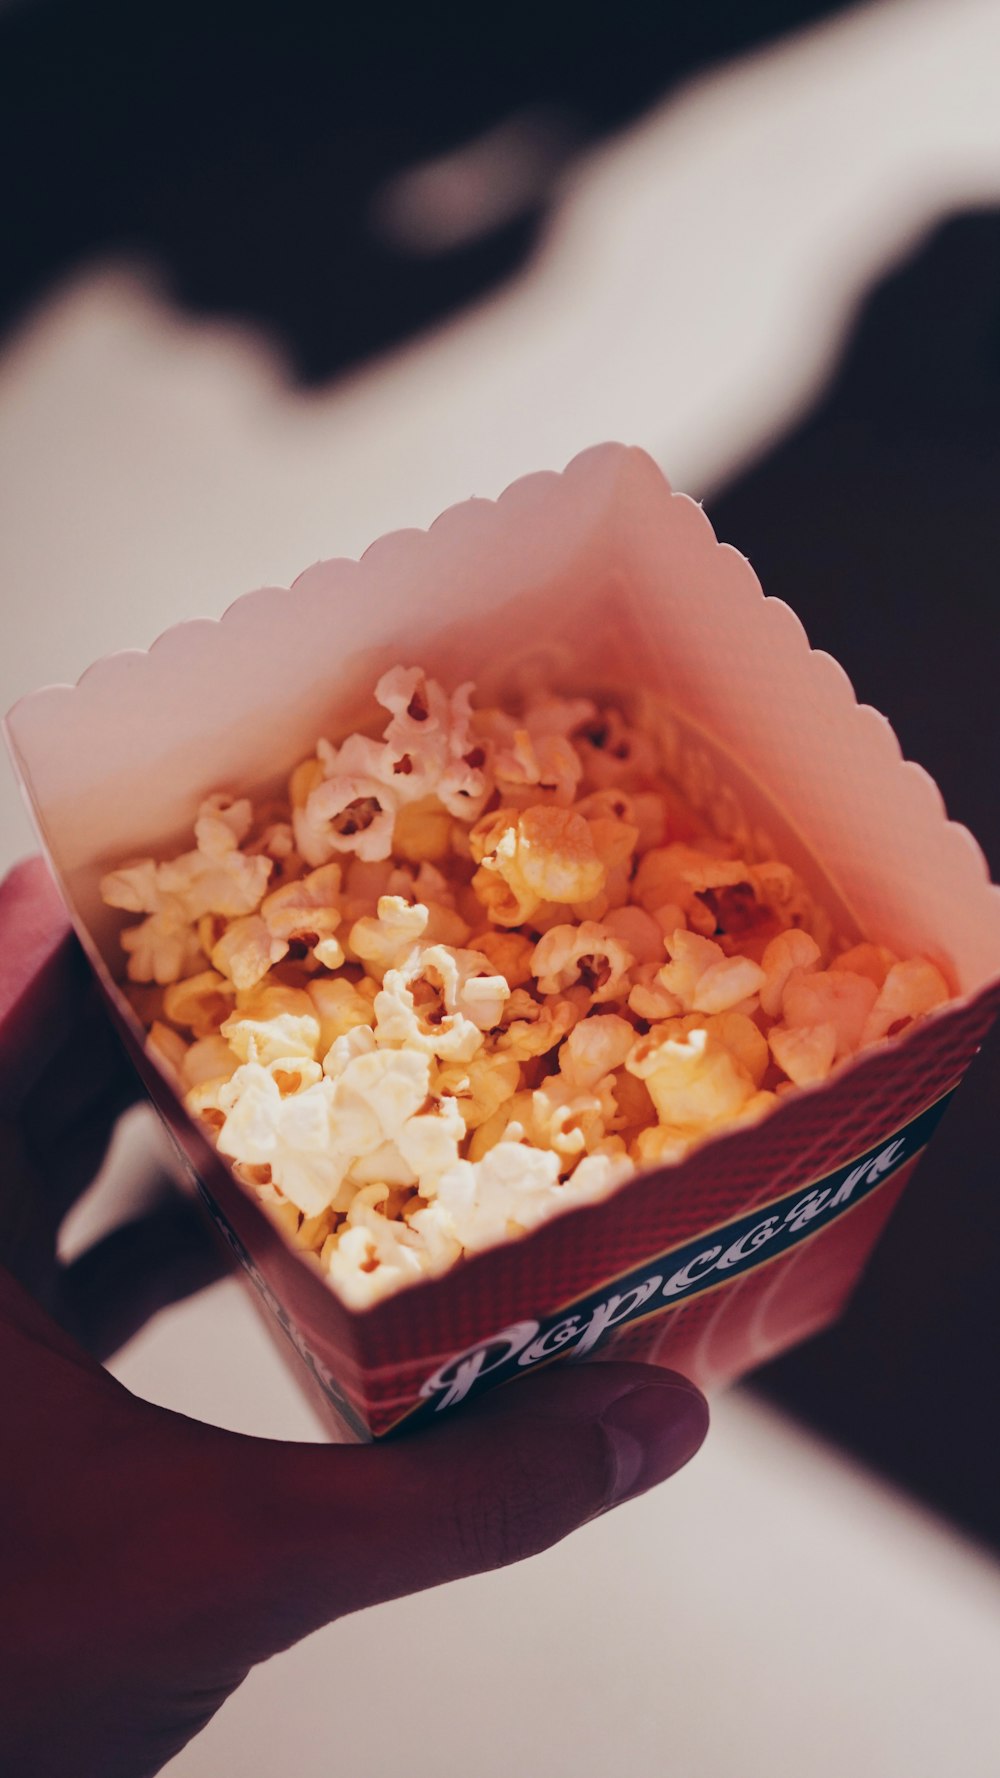 person holding popcorn in box